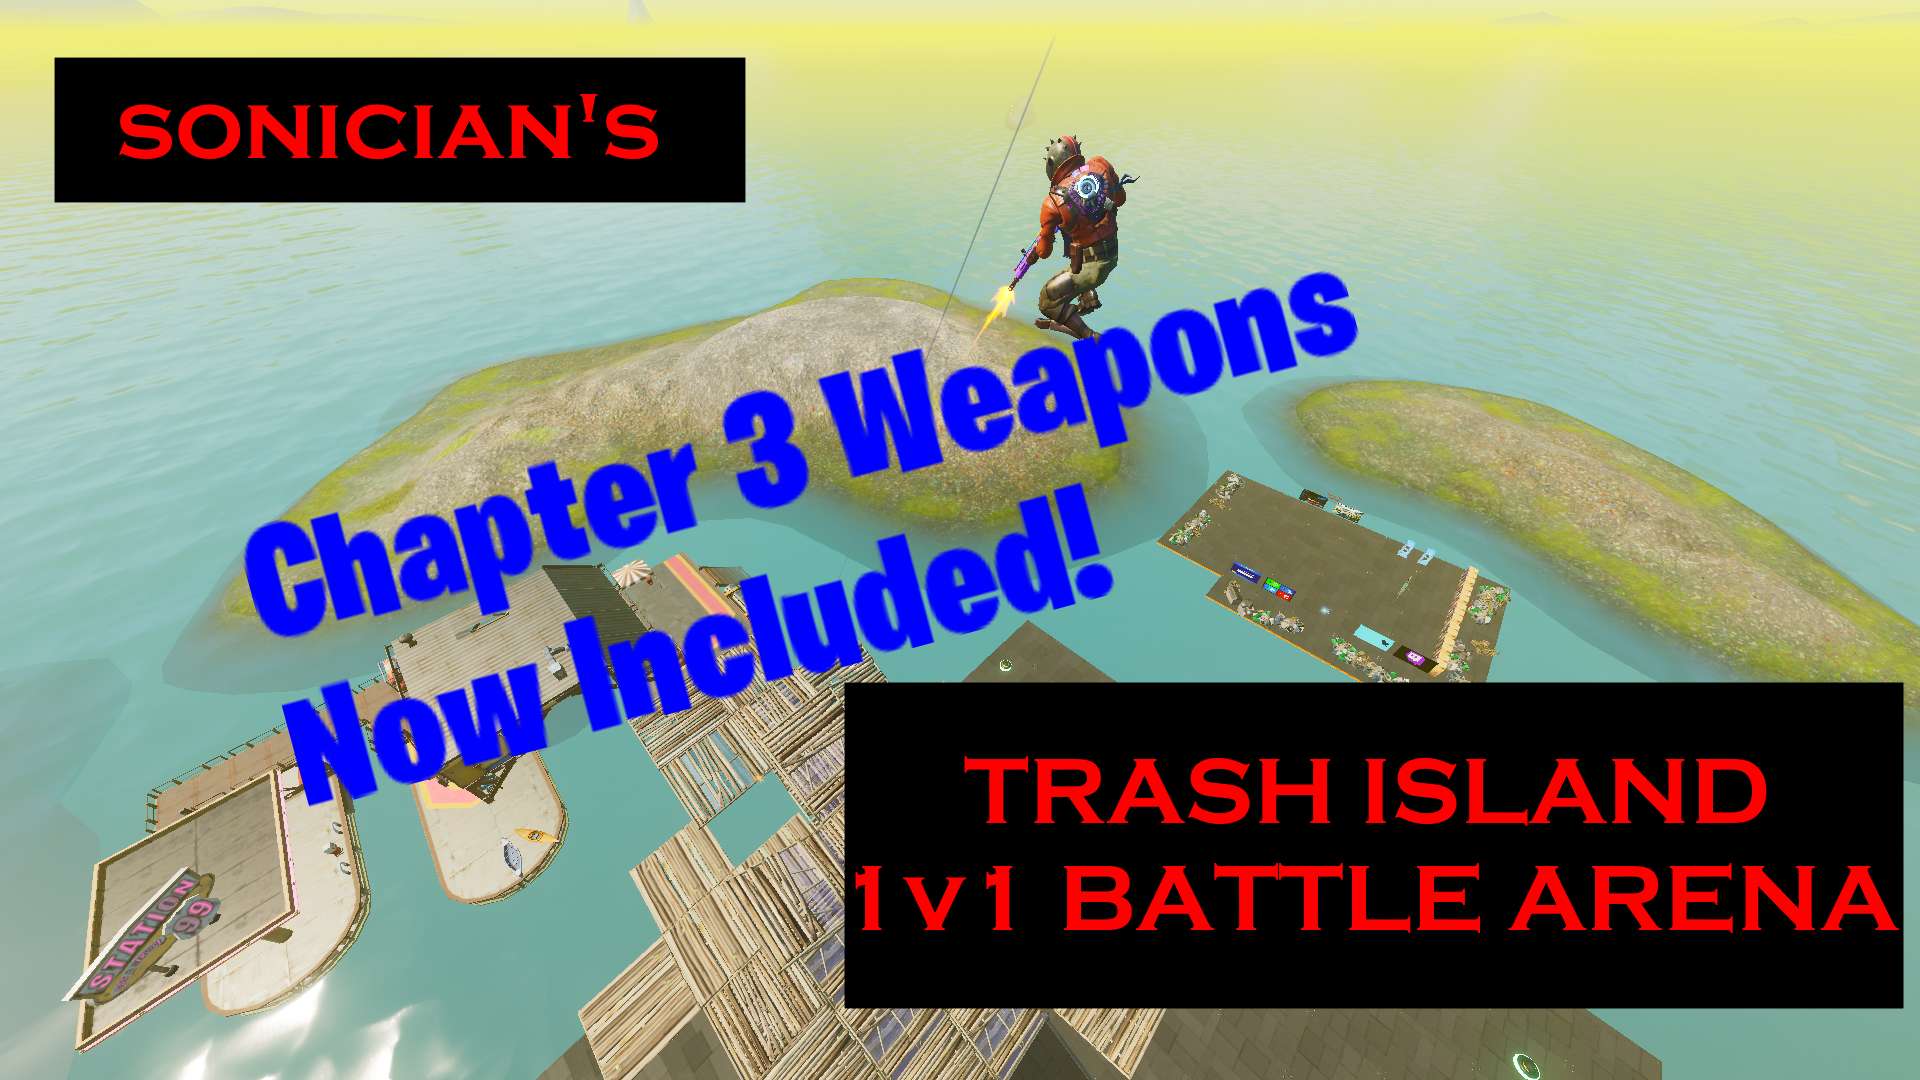 Sonician's Trash Island 1v1 Battle Arena